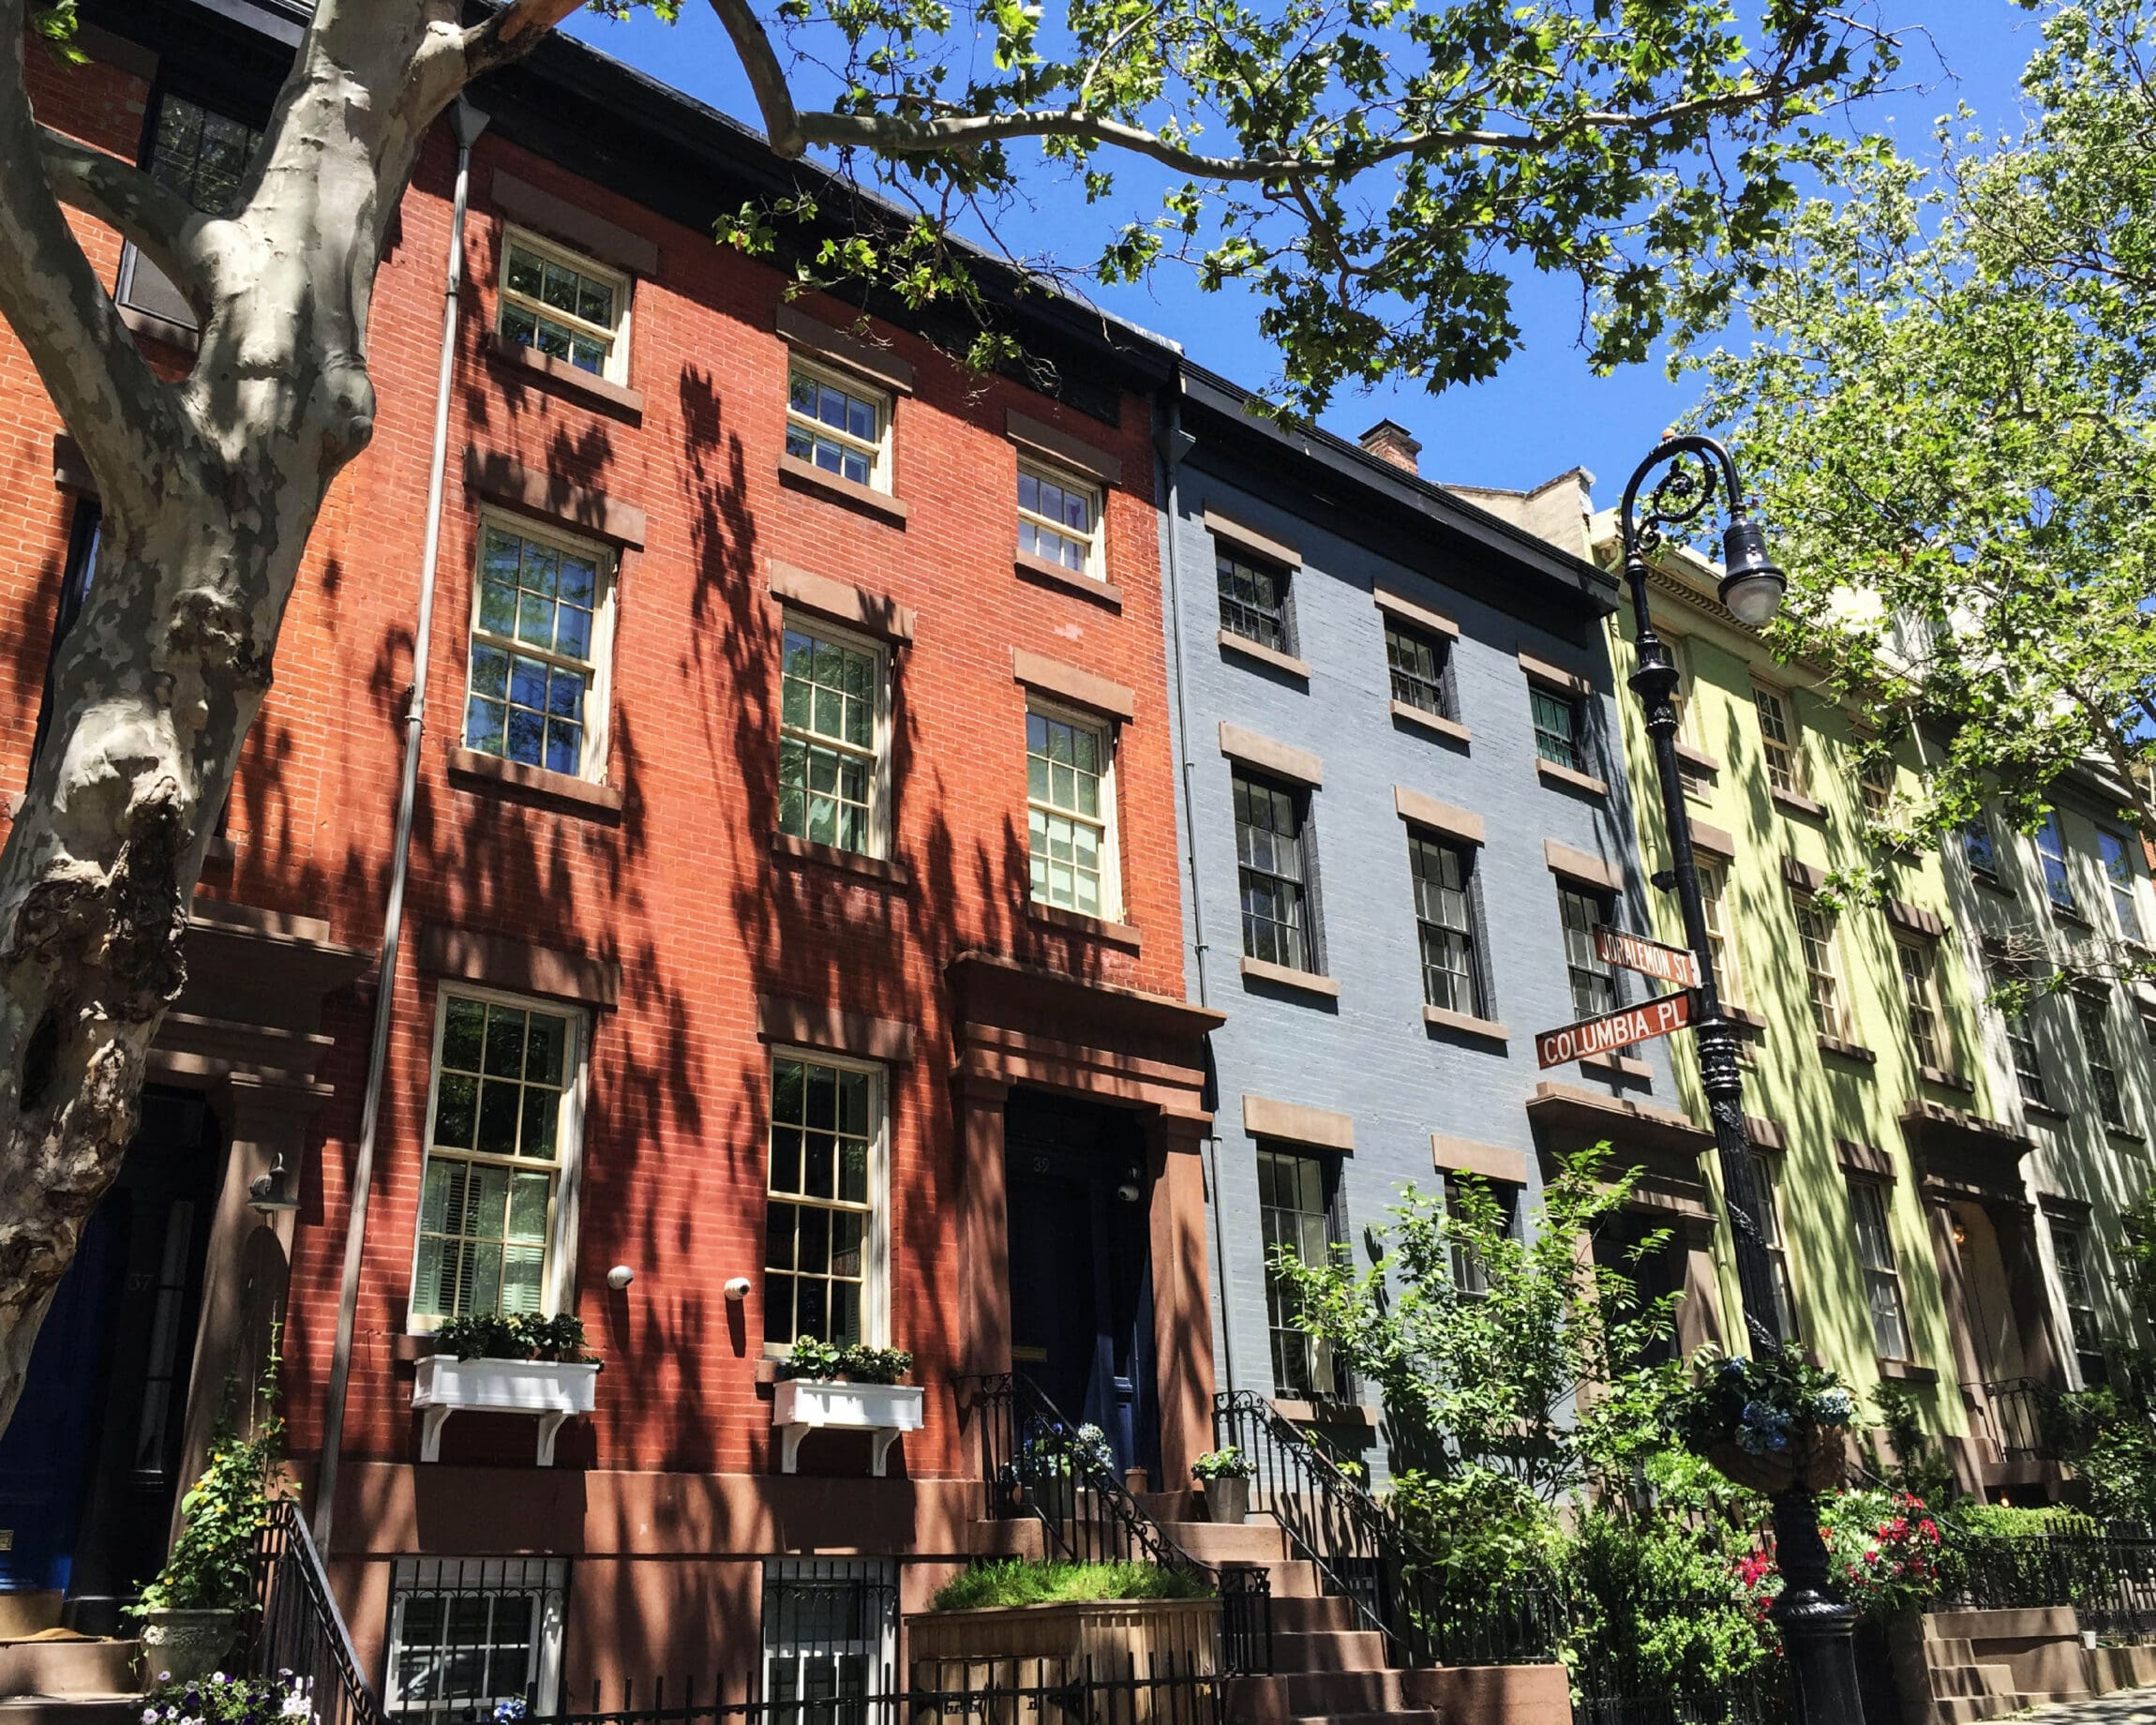 William Li's guide to New York | Tree-lined brownstone blocks in Brooklyn Heights